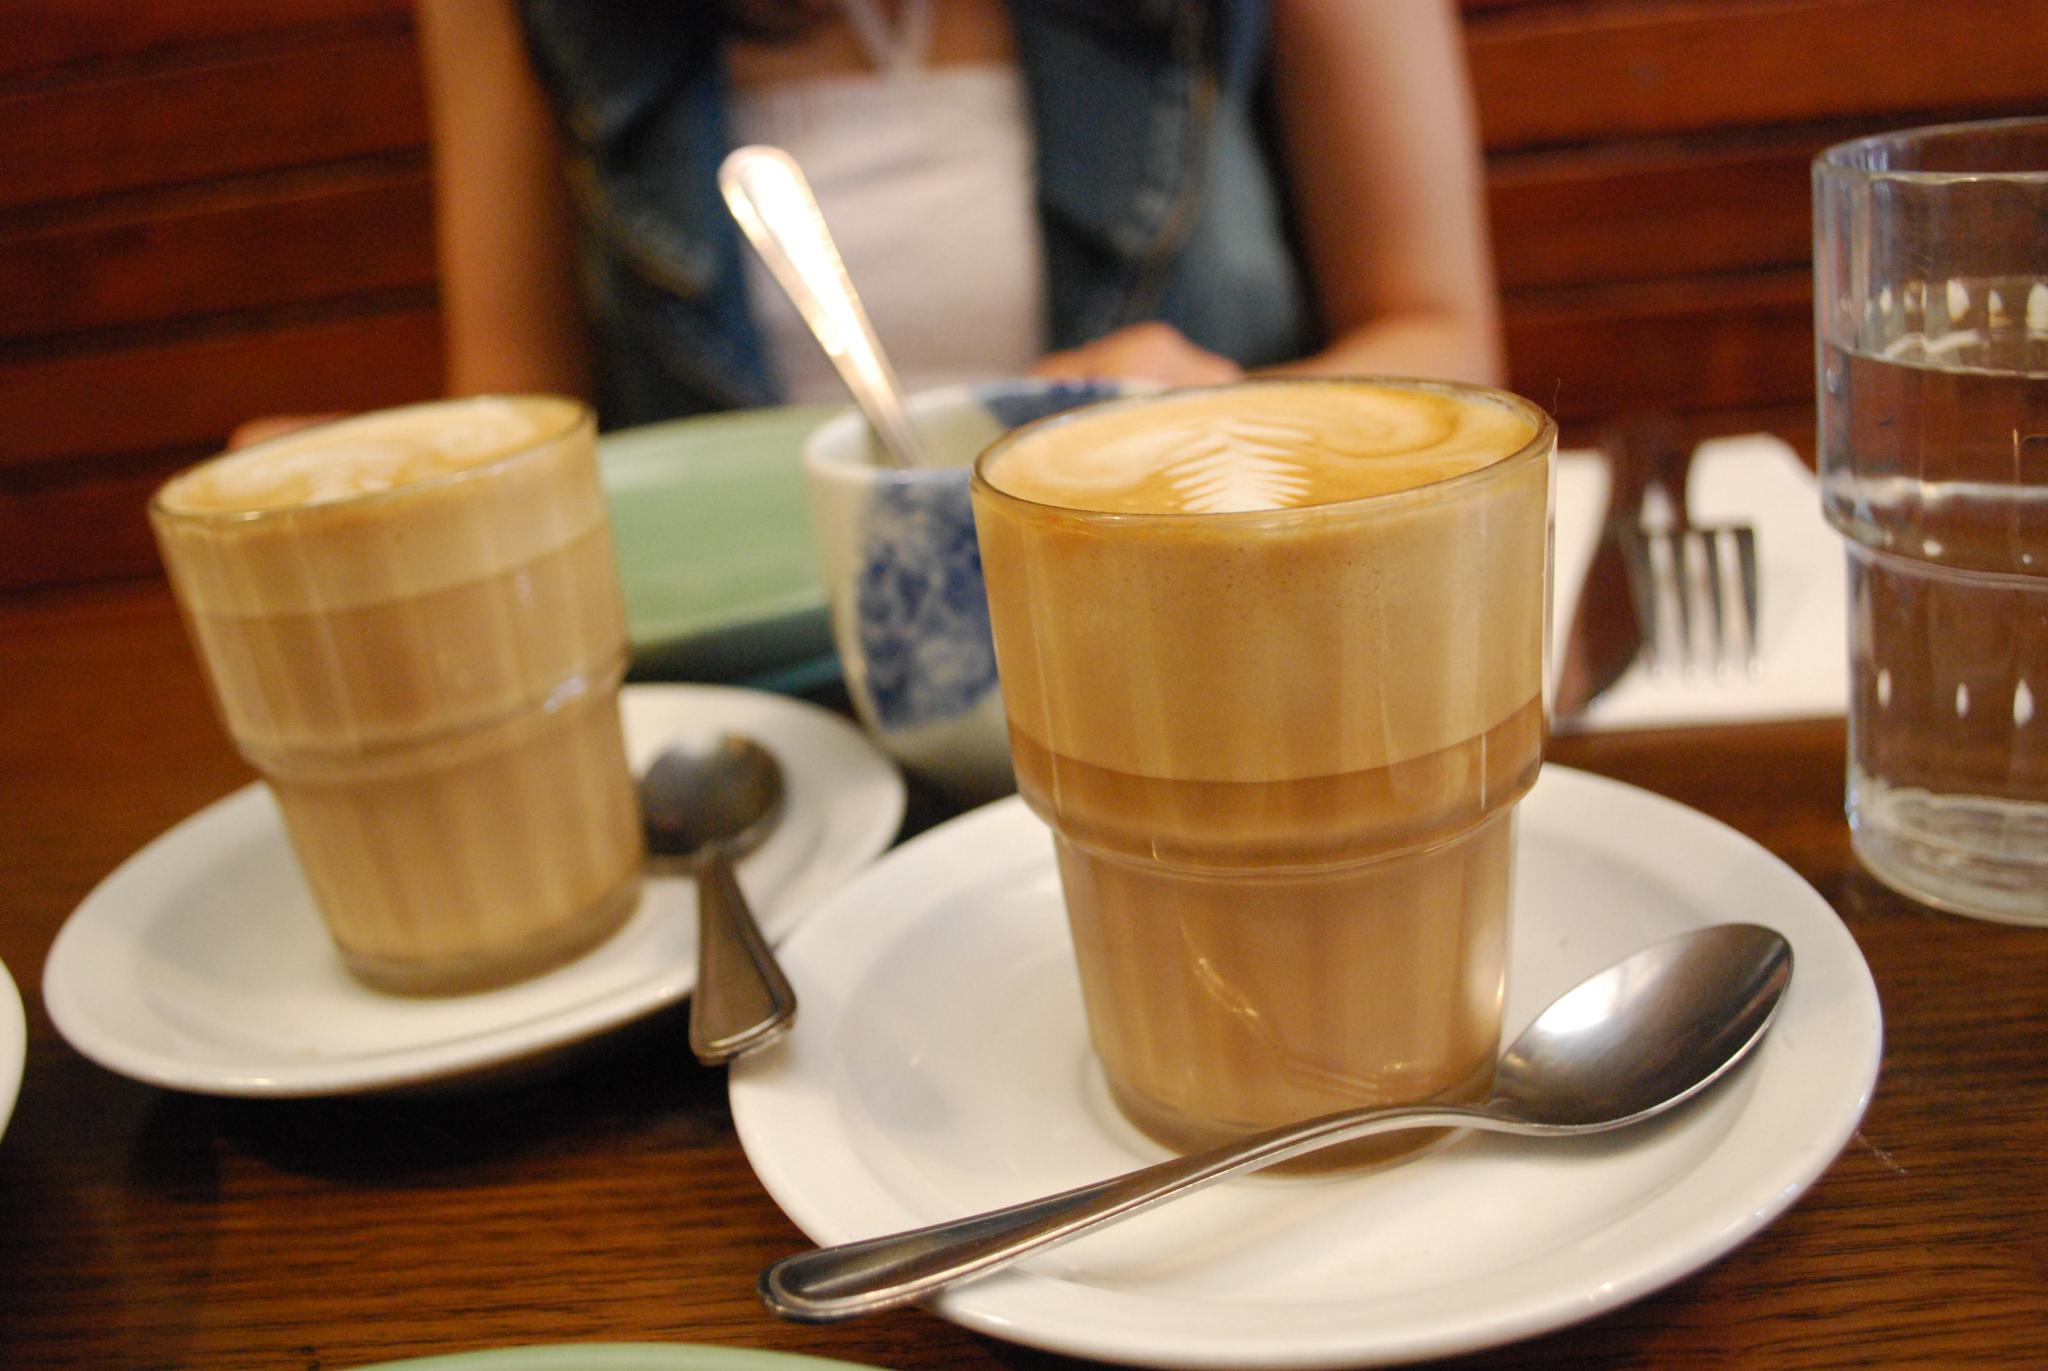 soymilk_caffe_latte_art2_flickr_user_avlxyz